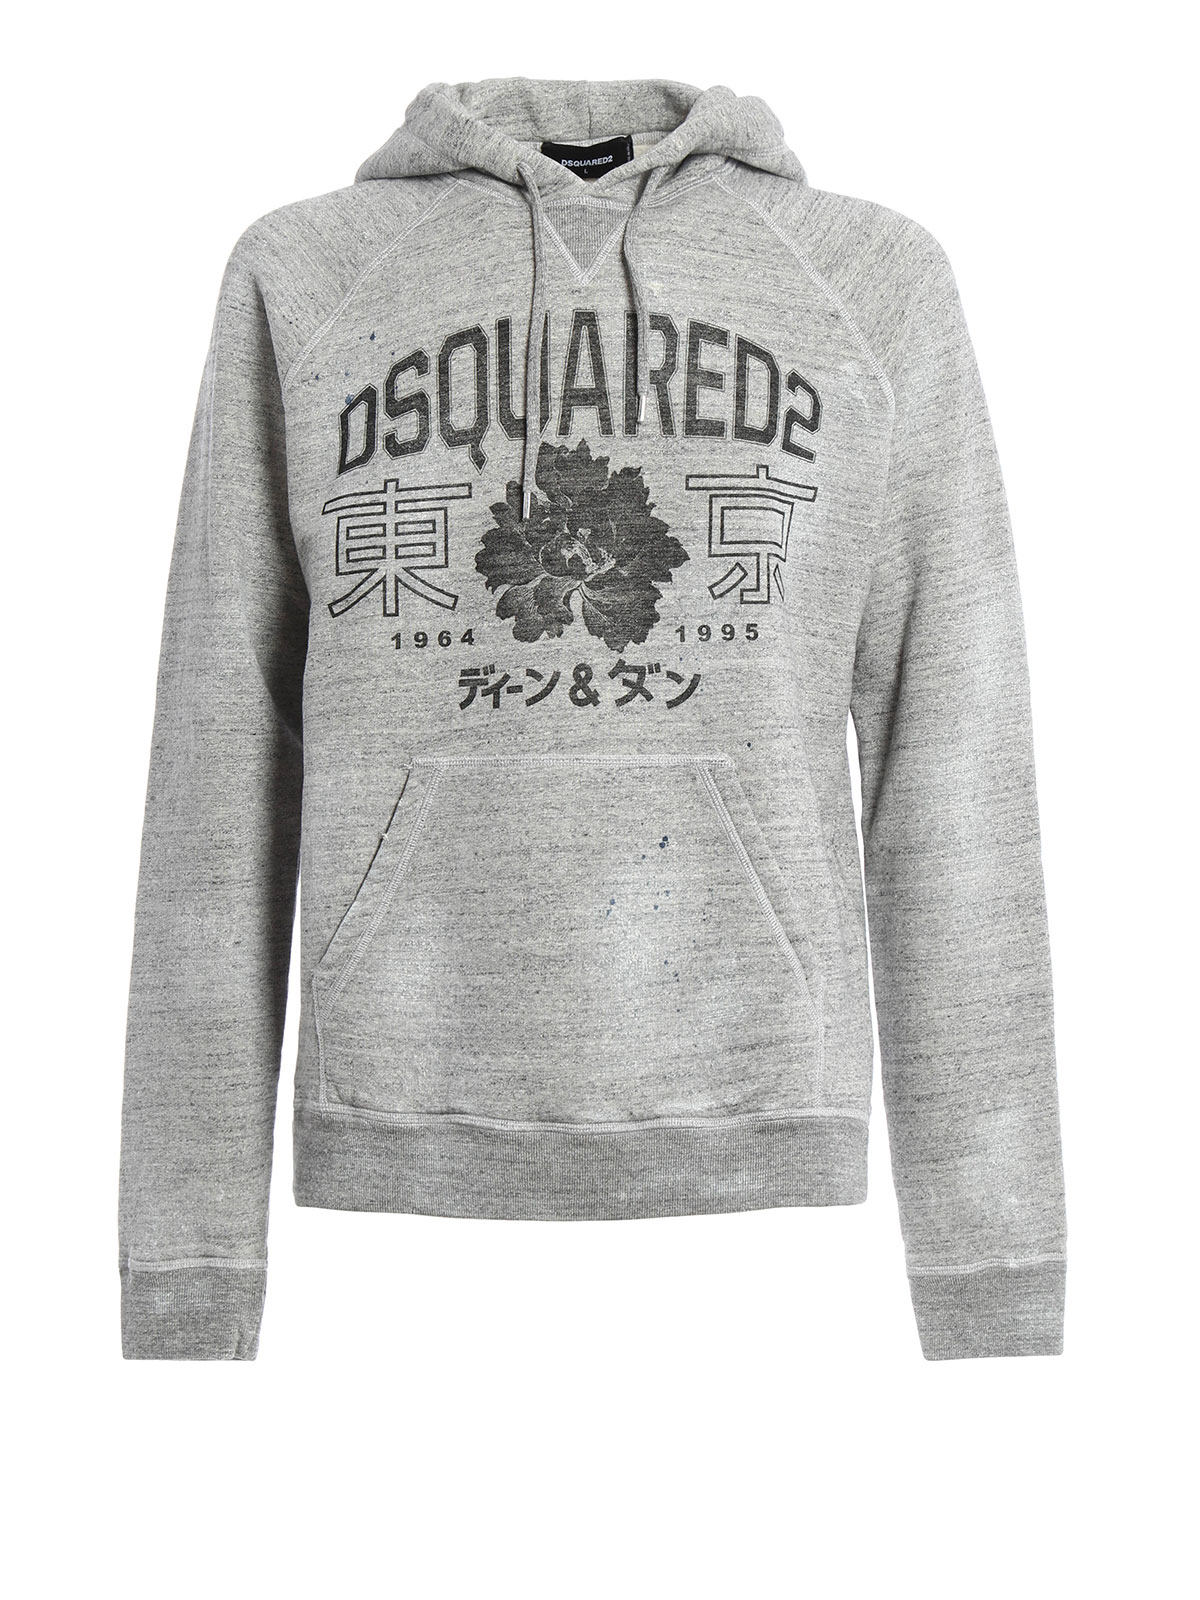 dsquared sweatshirt grey